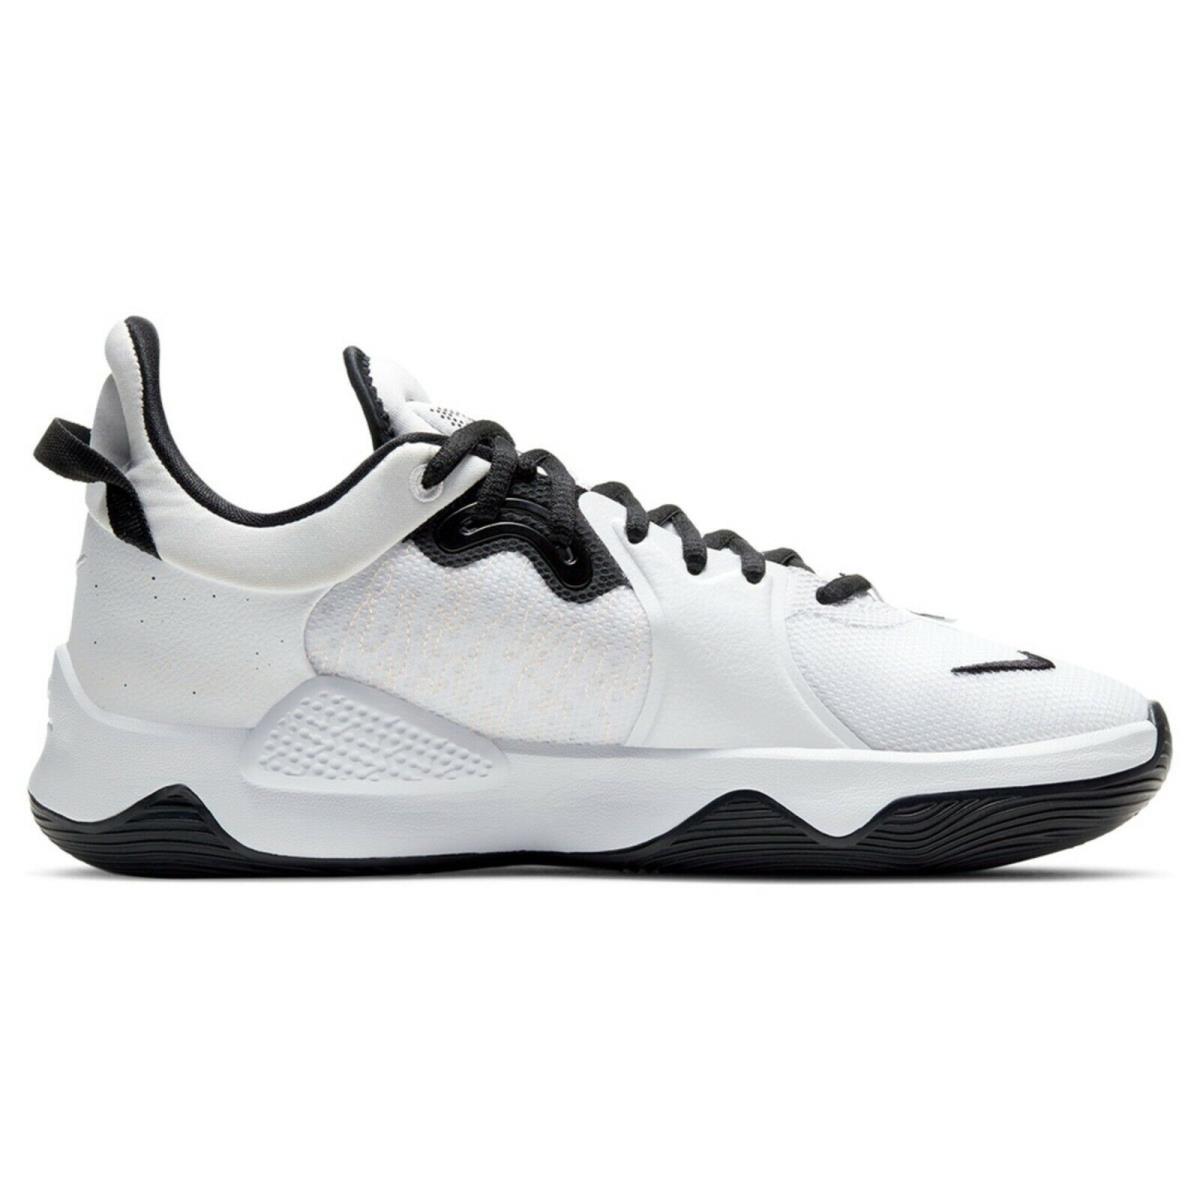 Nike Men s PG 5 Paul George White Black Basketball Shoes Sizes 11.5 13